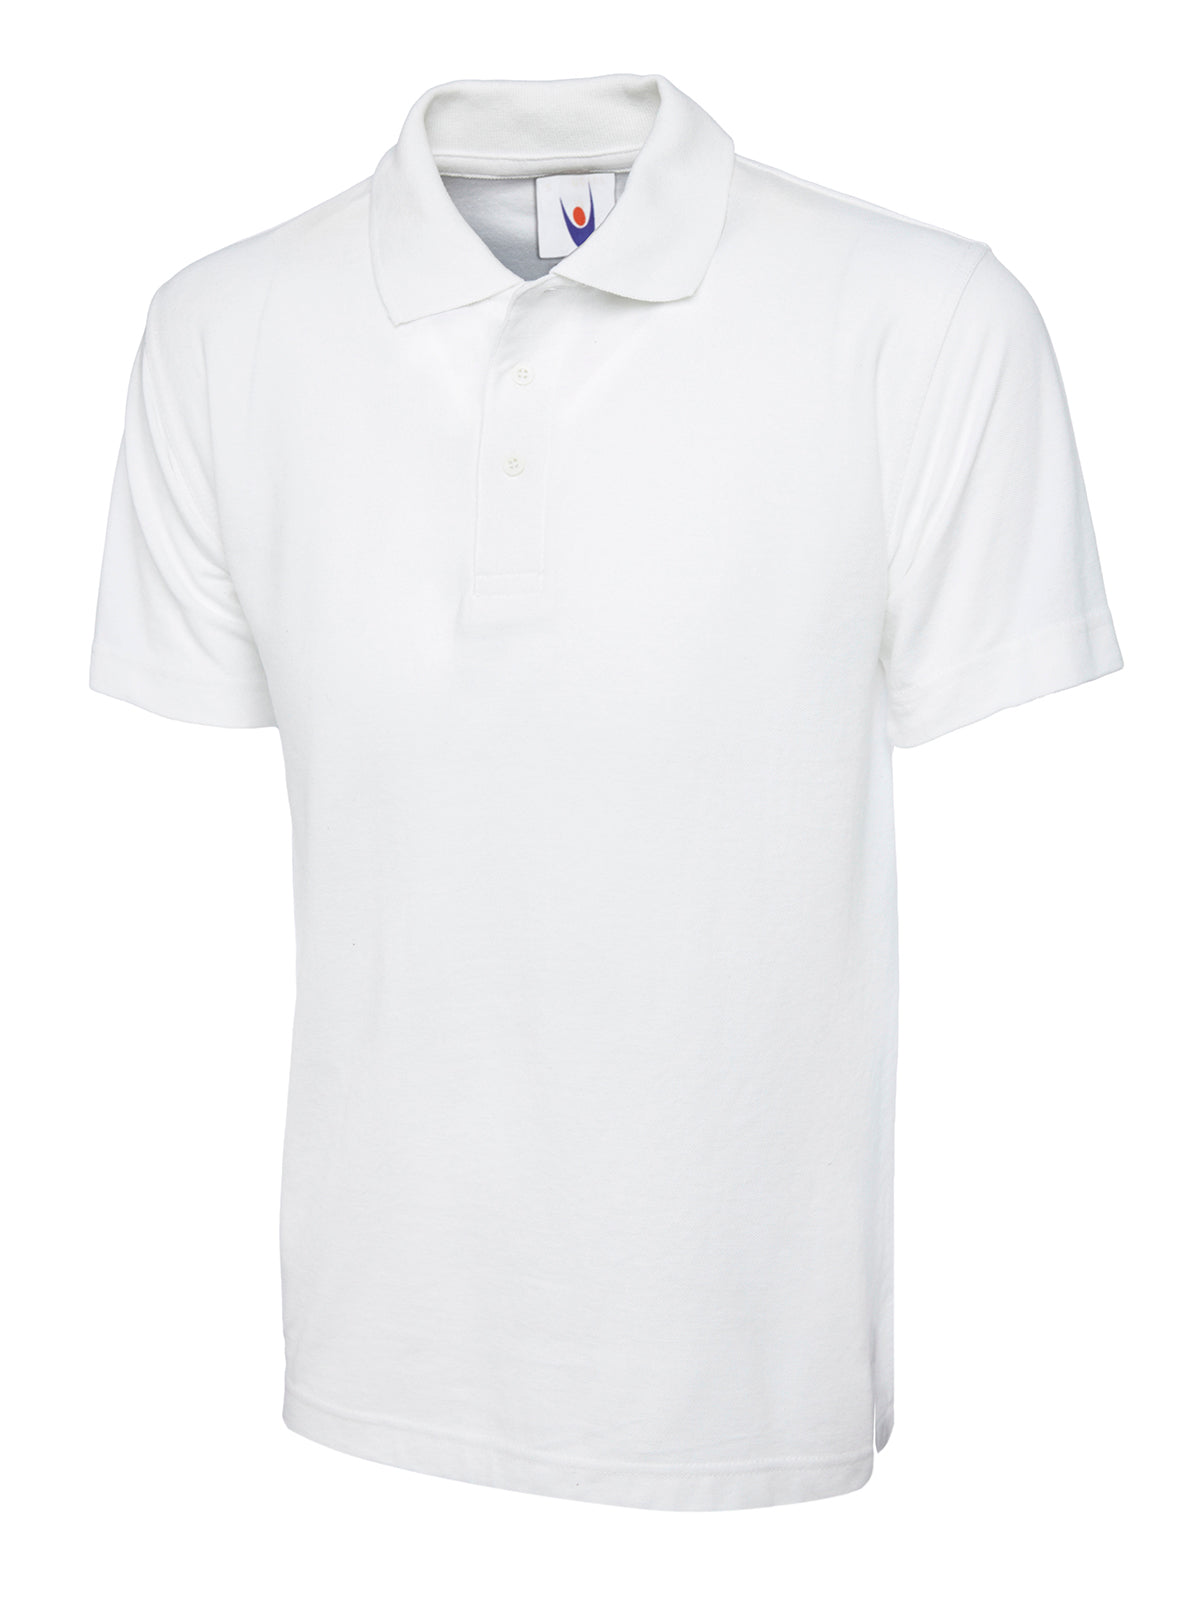 Uneek Olympic Poloshirt UC124 - White